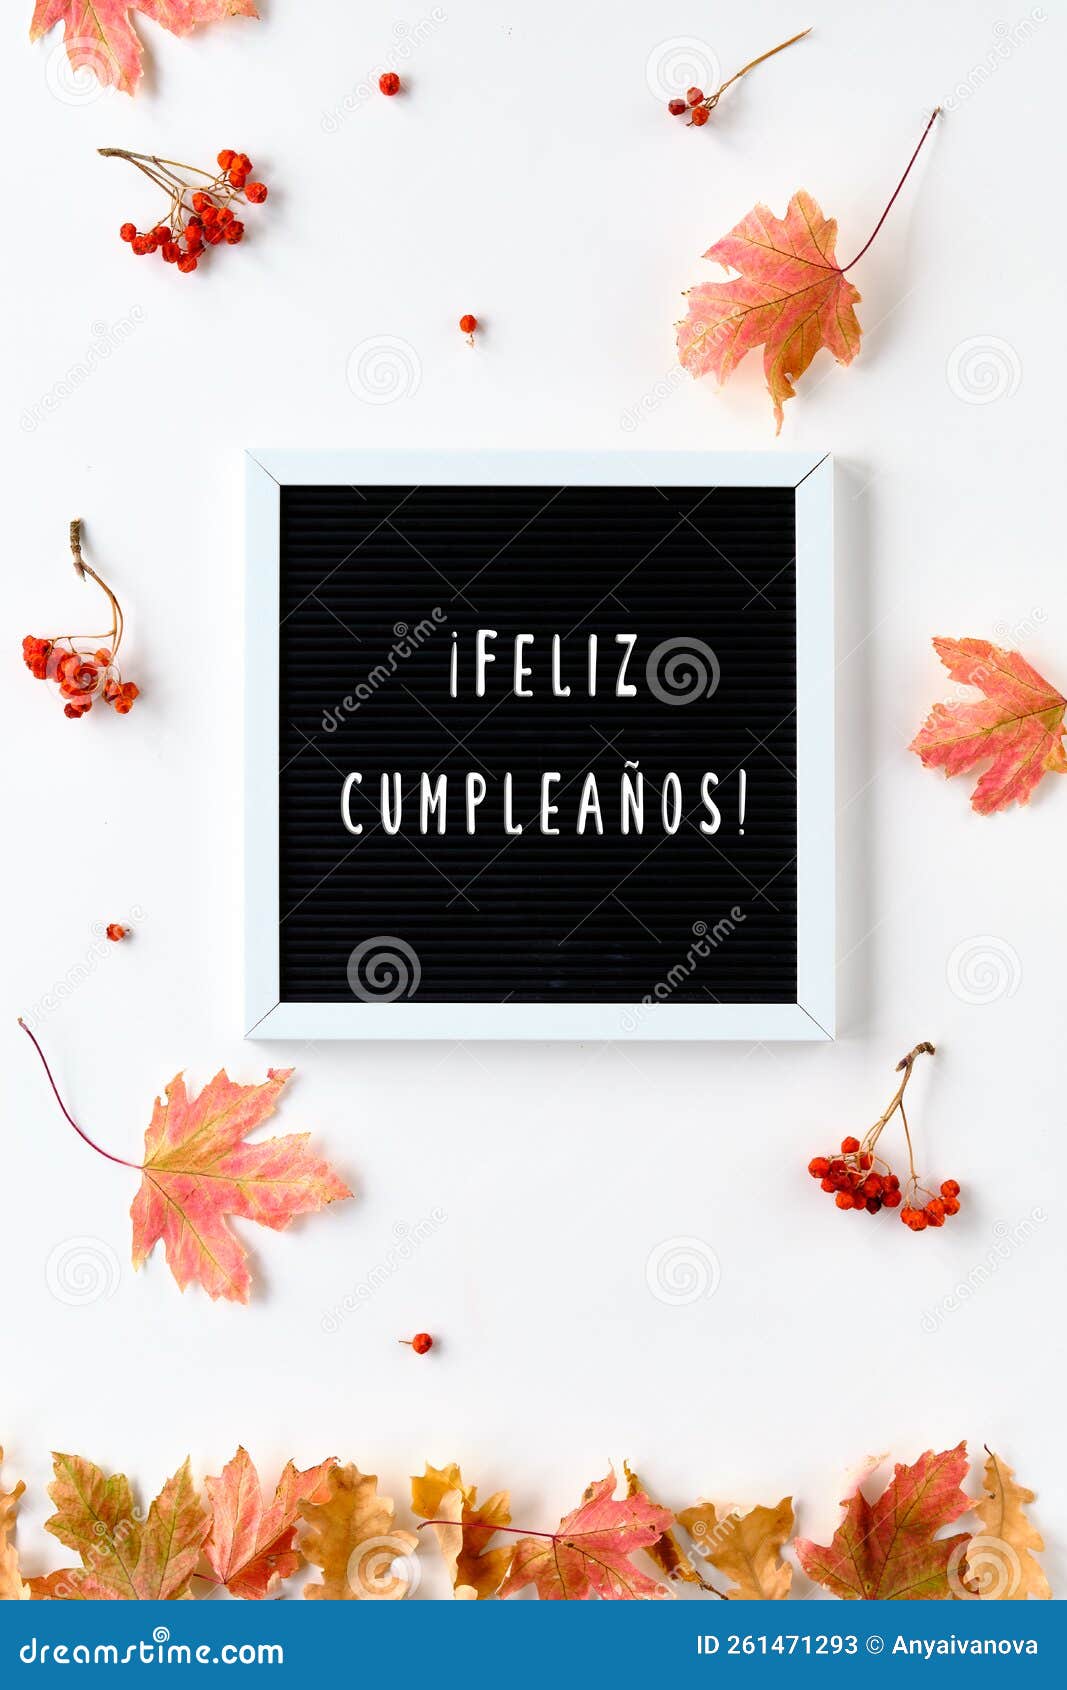 Feliz Cumpleanos Images – Browse 196 Stock Photos, Vectors, and Video,  feliz cumpleaños 